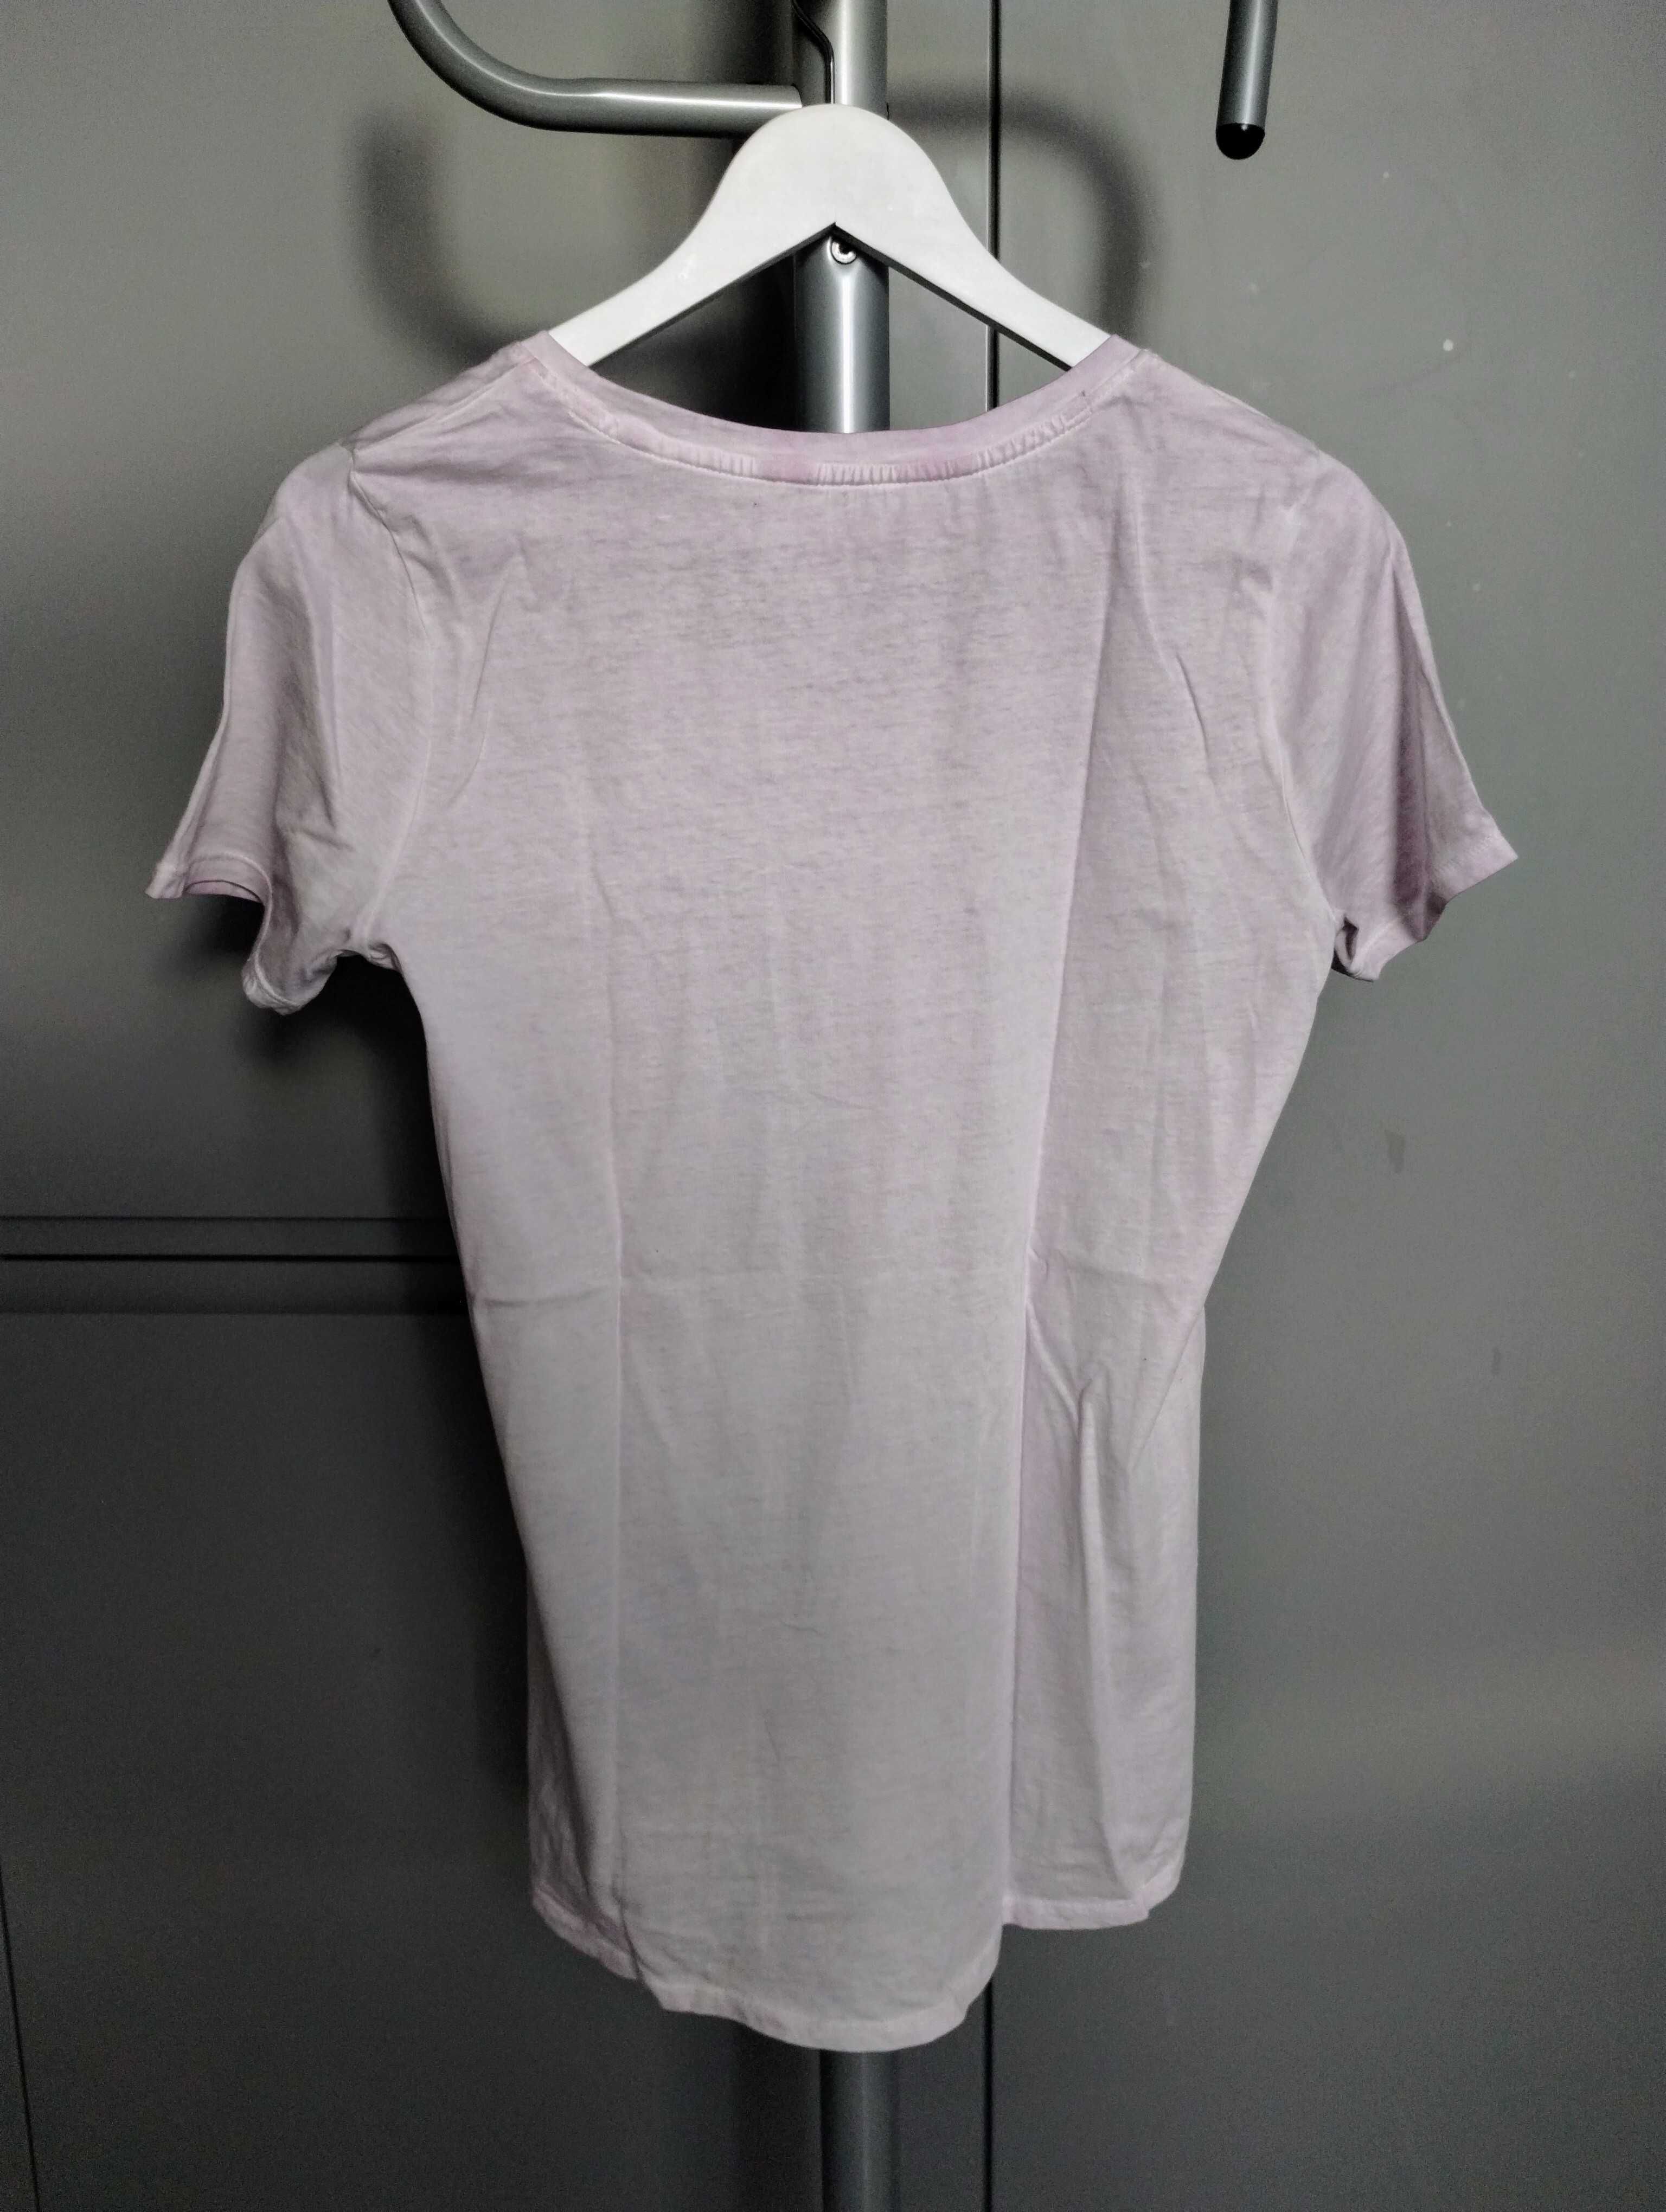 Skechers fioletowy t-shirt damski koszulka 36 S